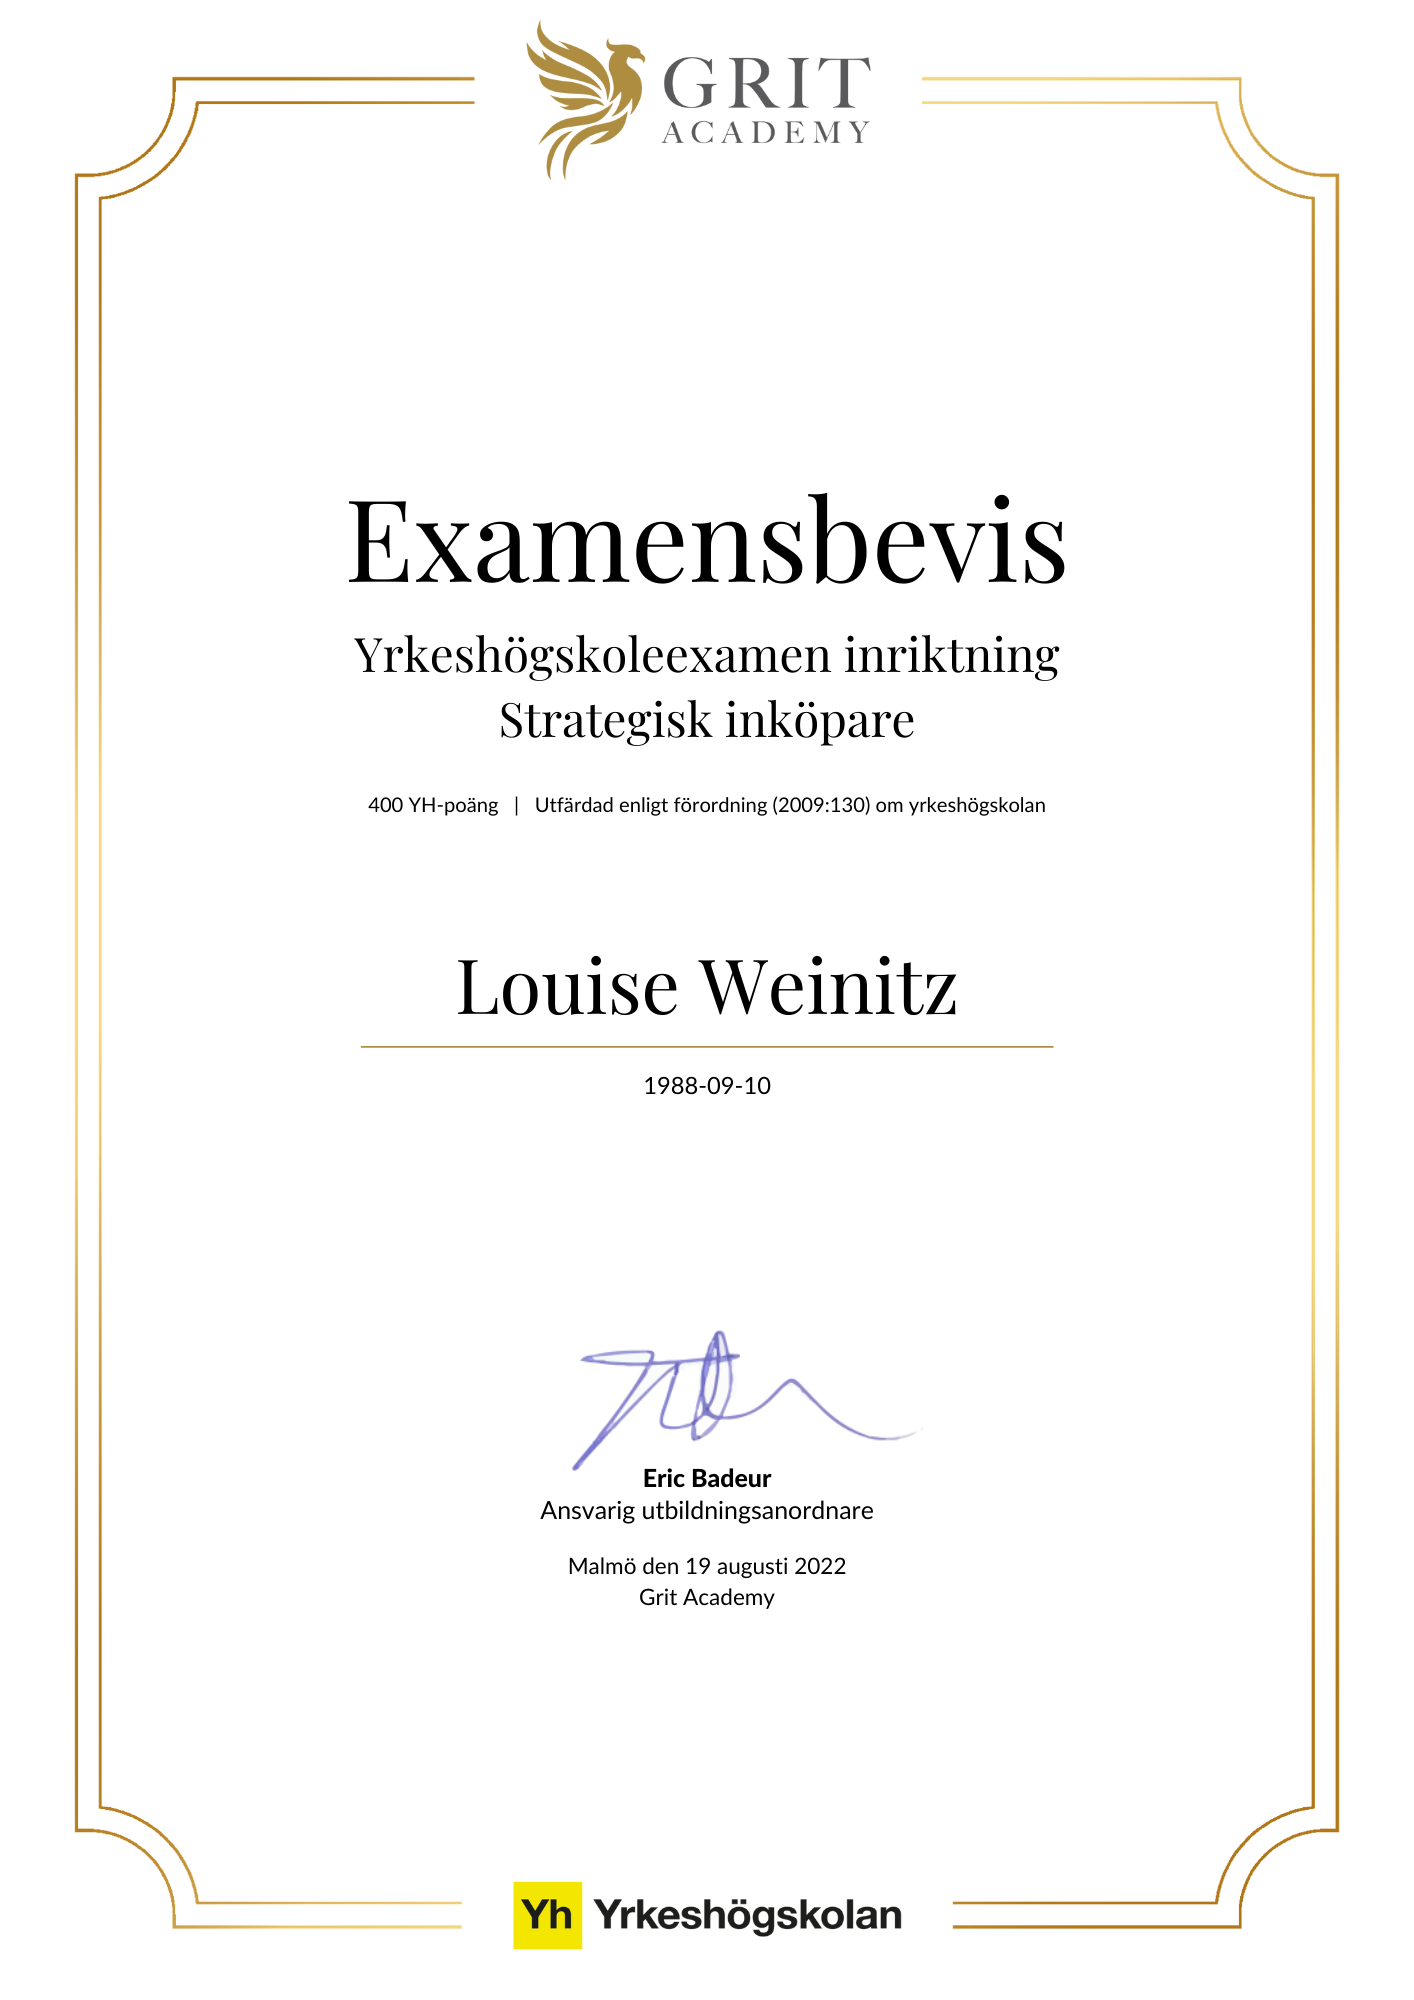 Examensbevis Louise Weinitz - 1